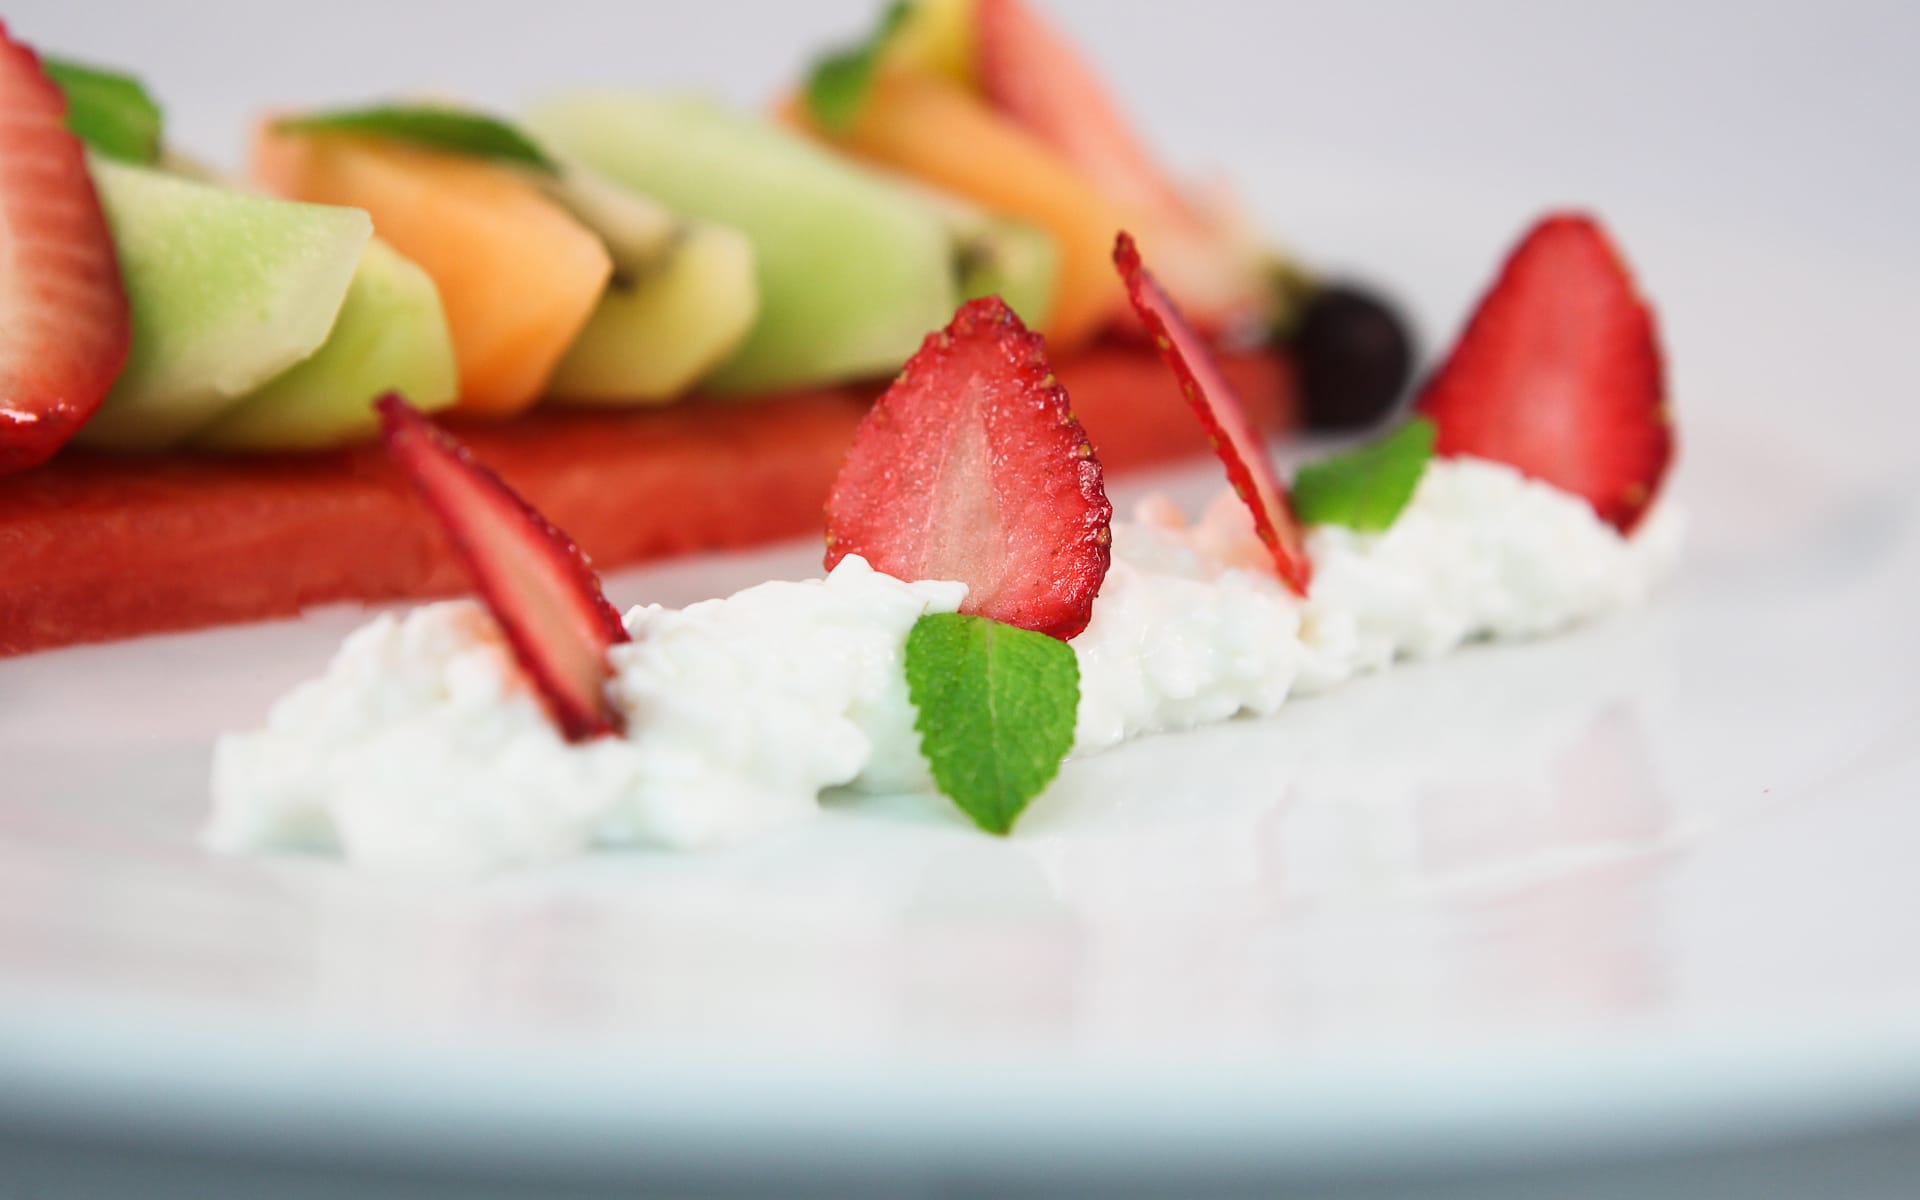 Carnival Cruise Line's strawberry salad dessert